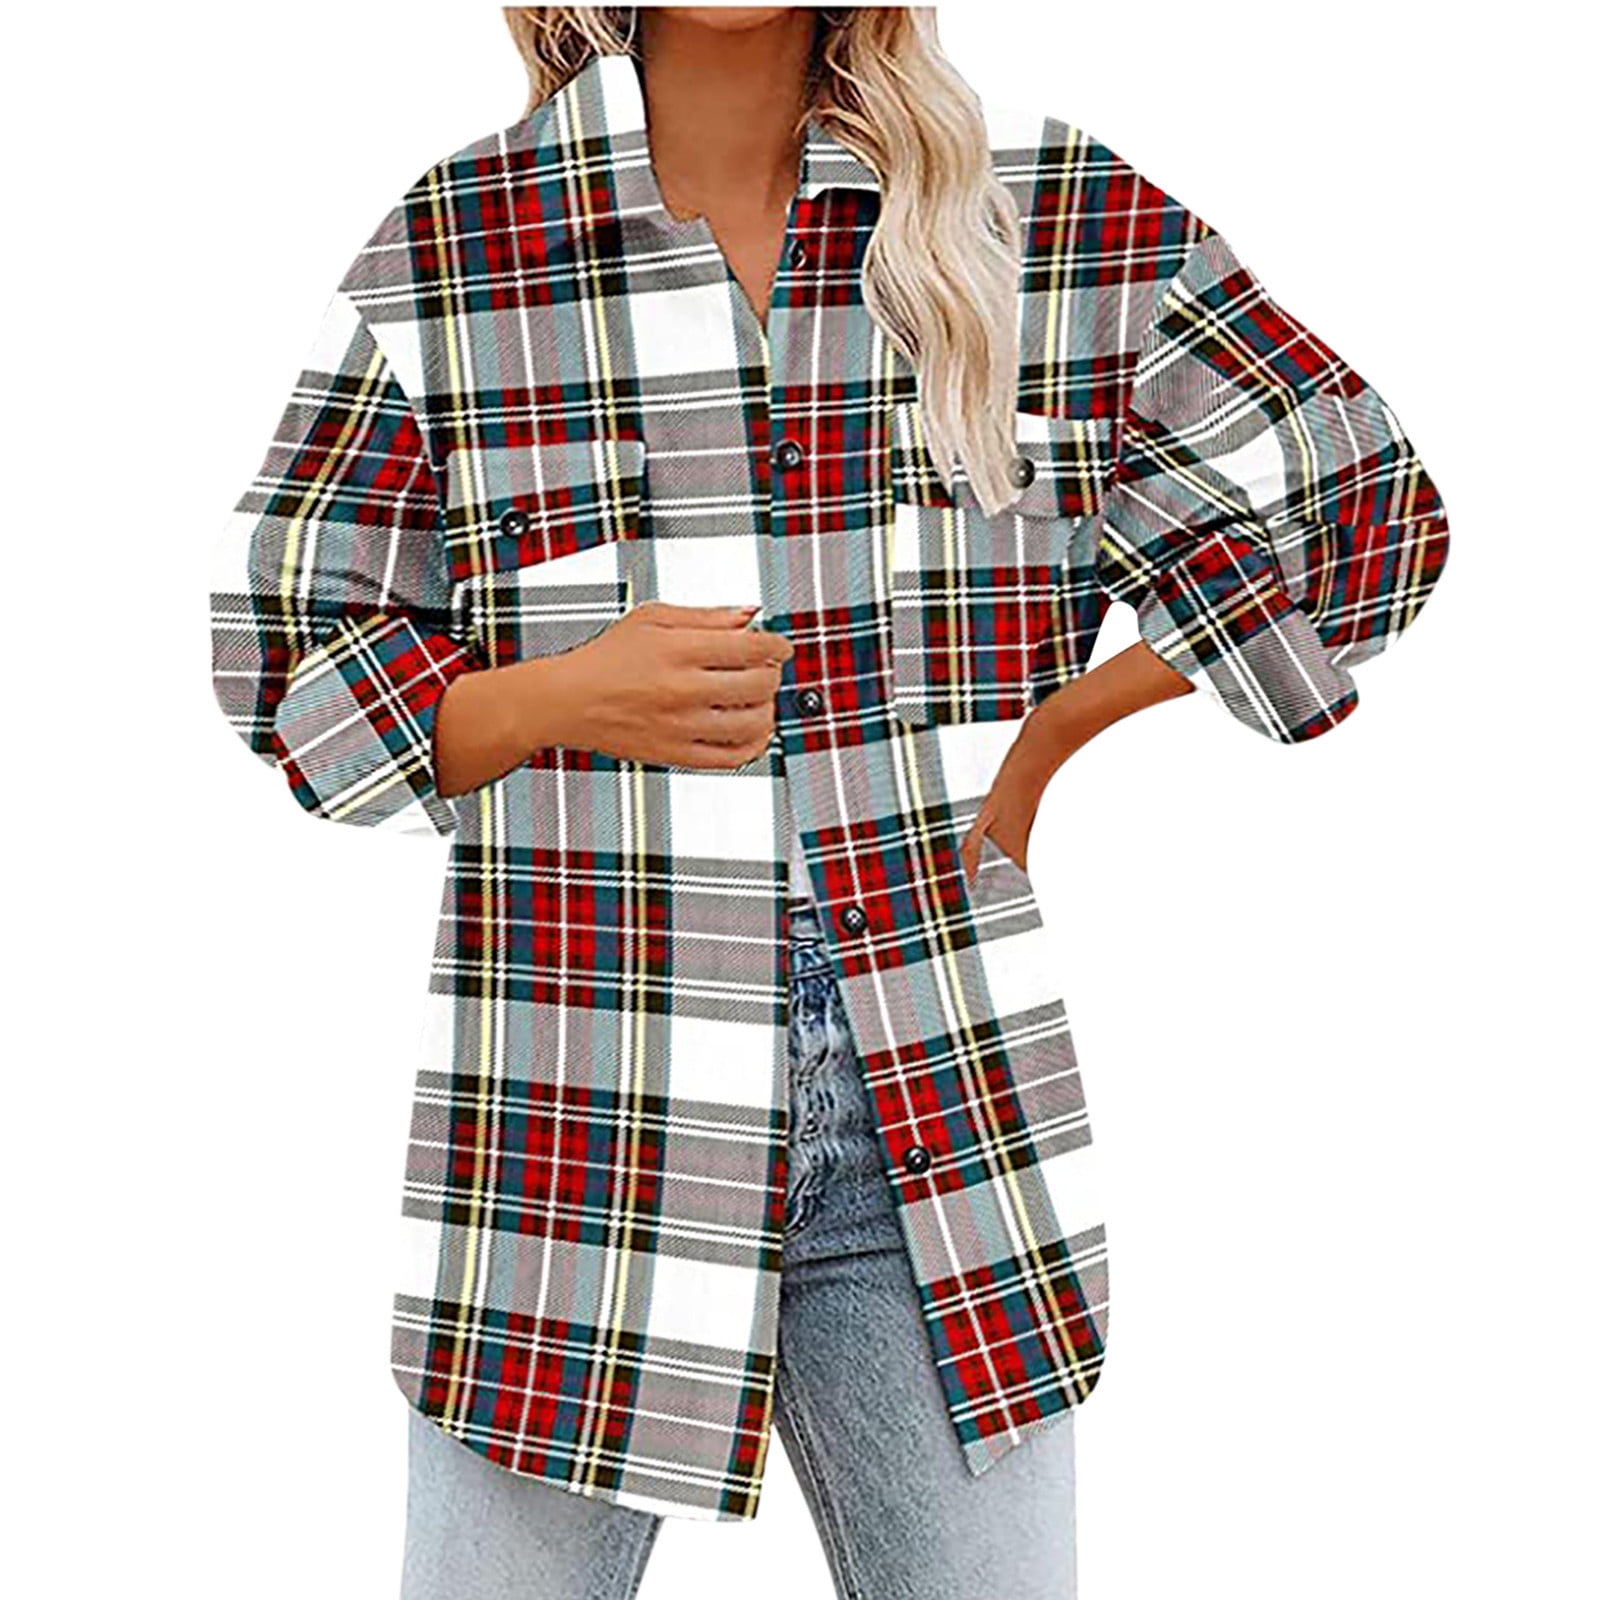 ZQGJB Savings Women's Oversized Flannel Plaid Button Down Shirts Long ...